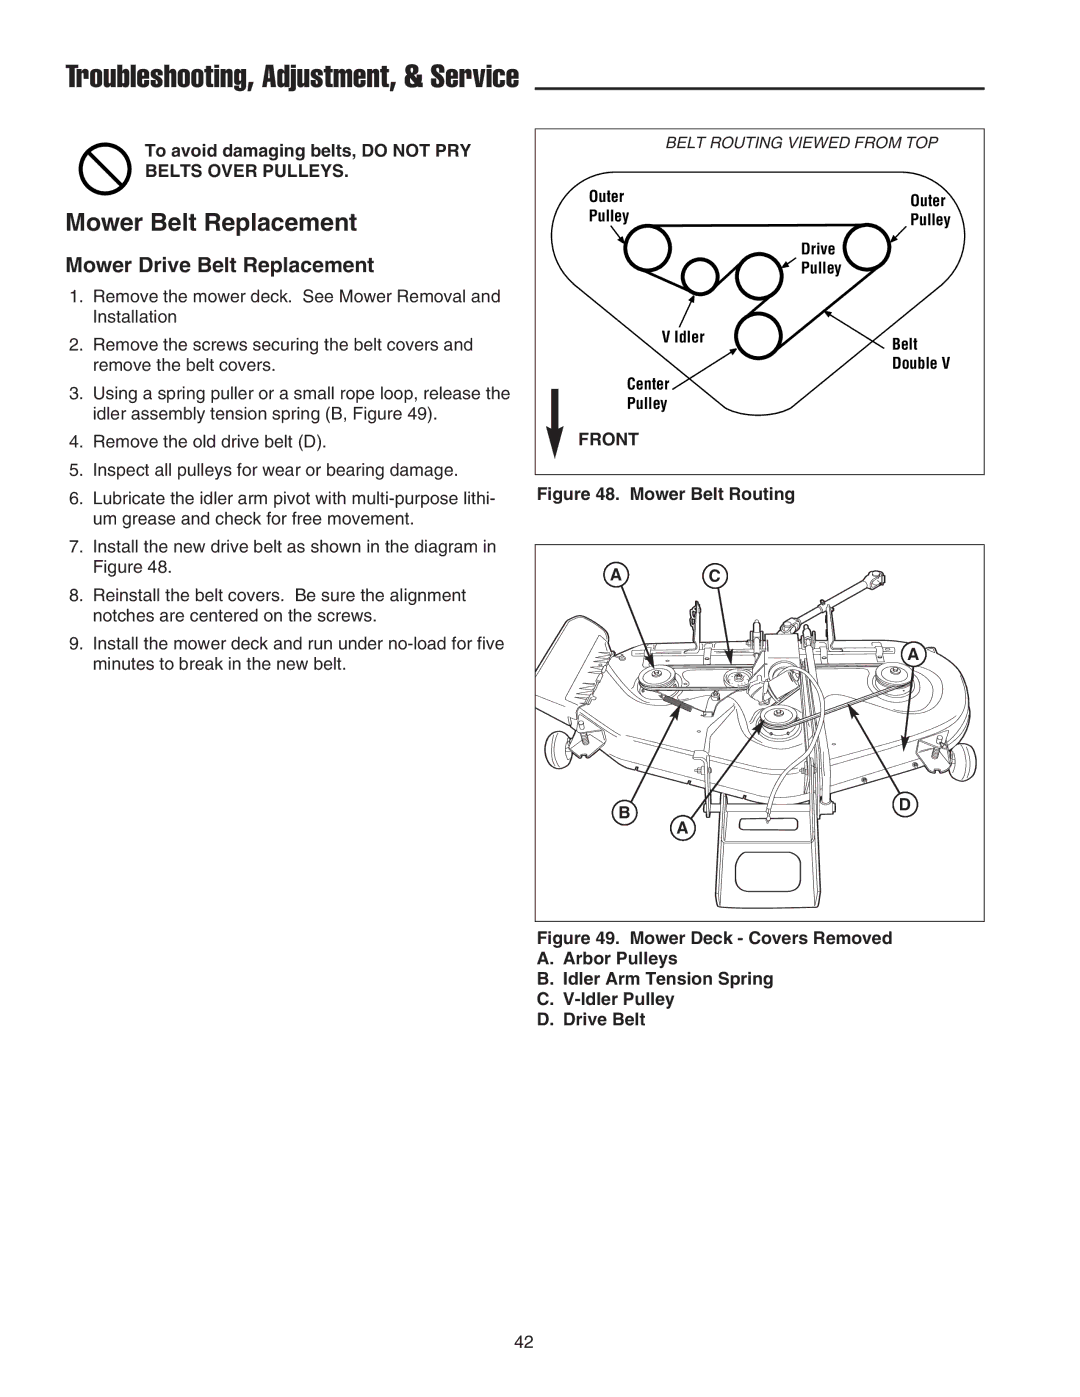 Snapper SGT27540D manual Mower Belt Replacement, Mower Drive Belt Replacement, To avoid damaging belts, do not PRY 